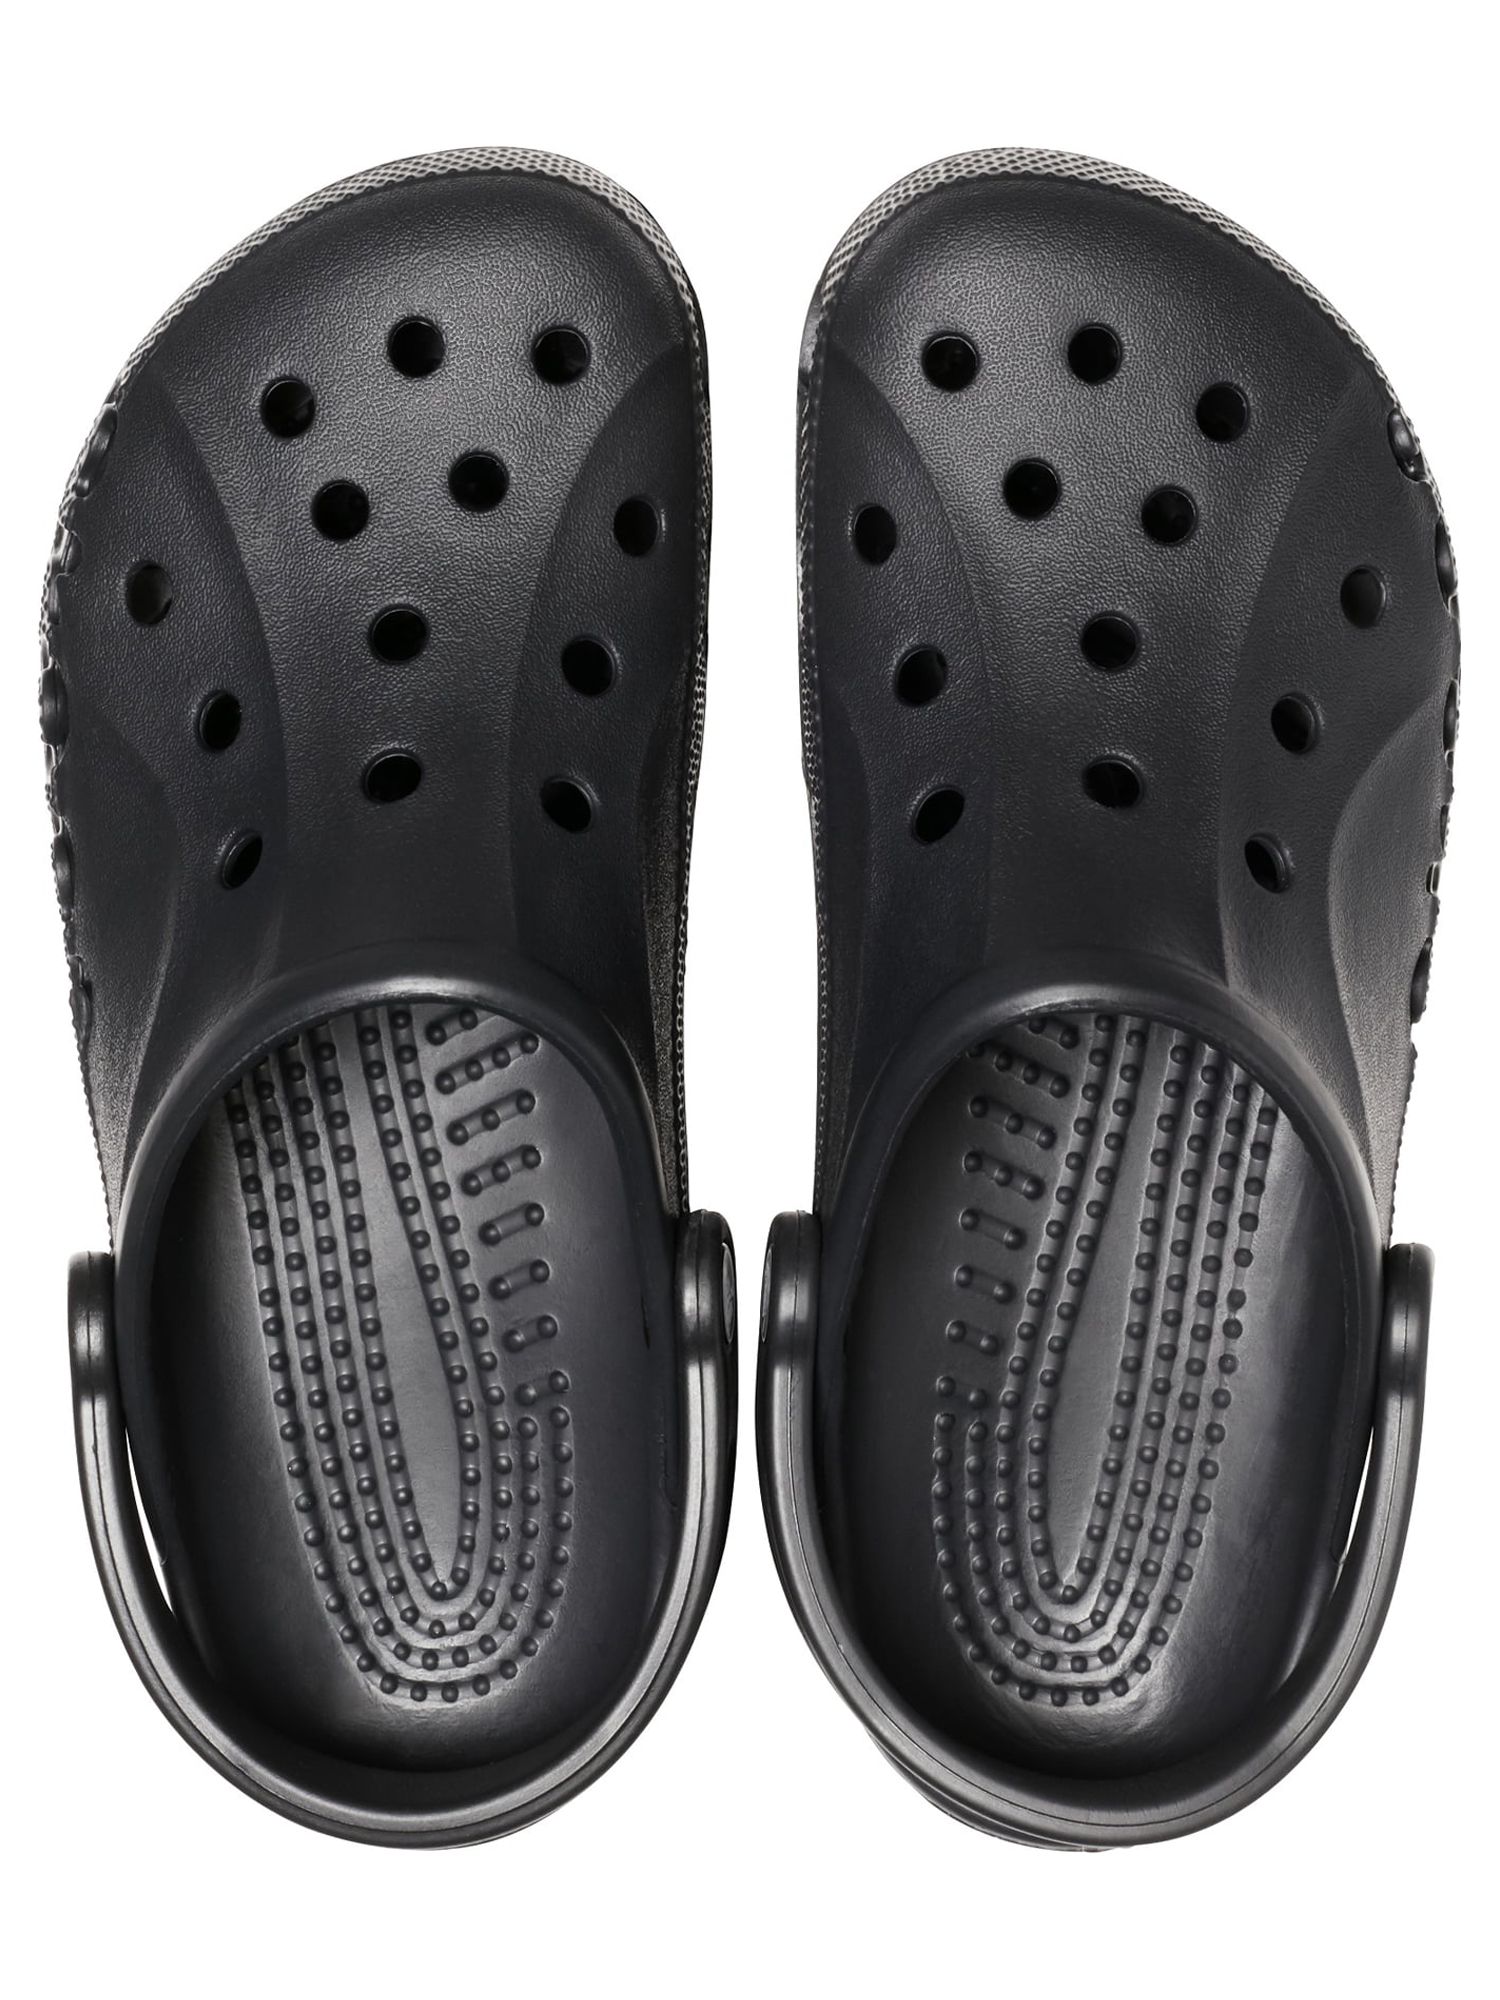 Crocs Men's and Women's Unisex Baya Clog Sandals - image 5 of 5